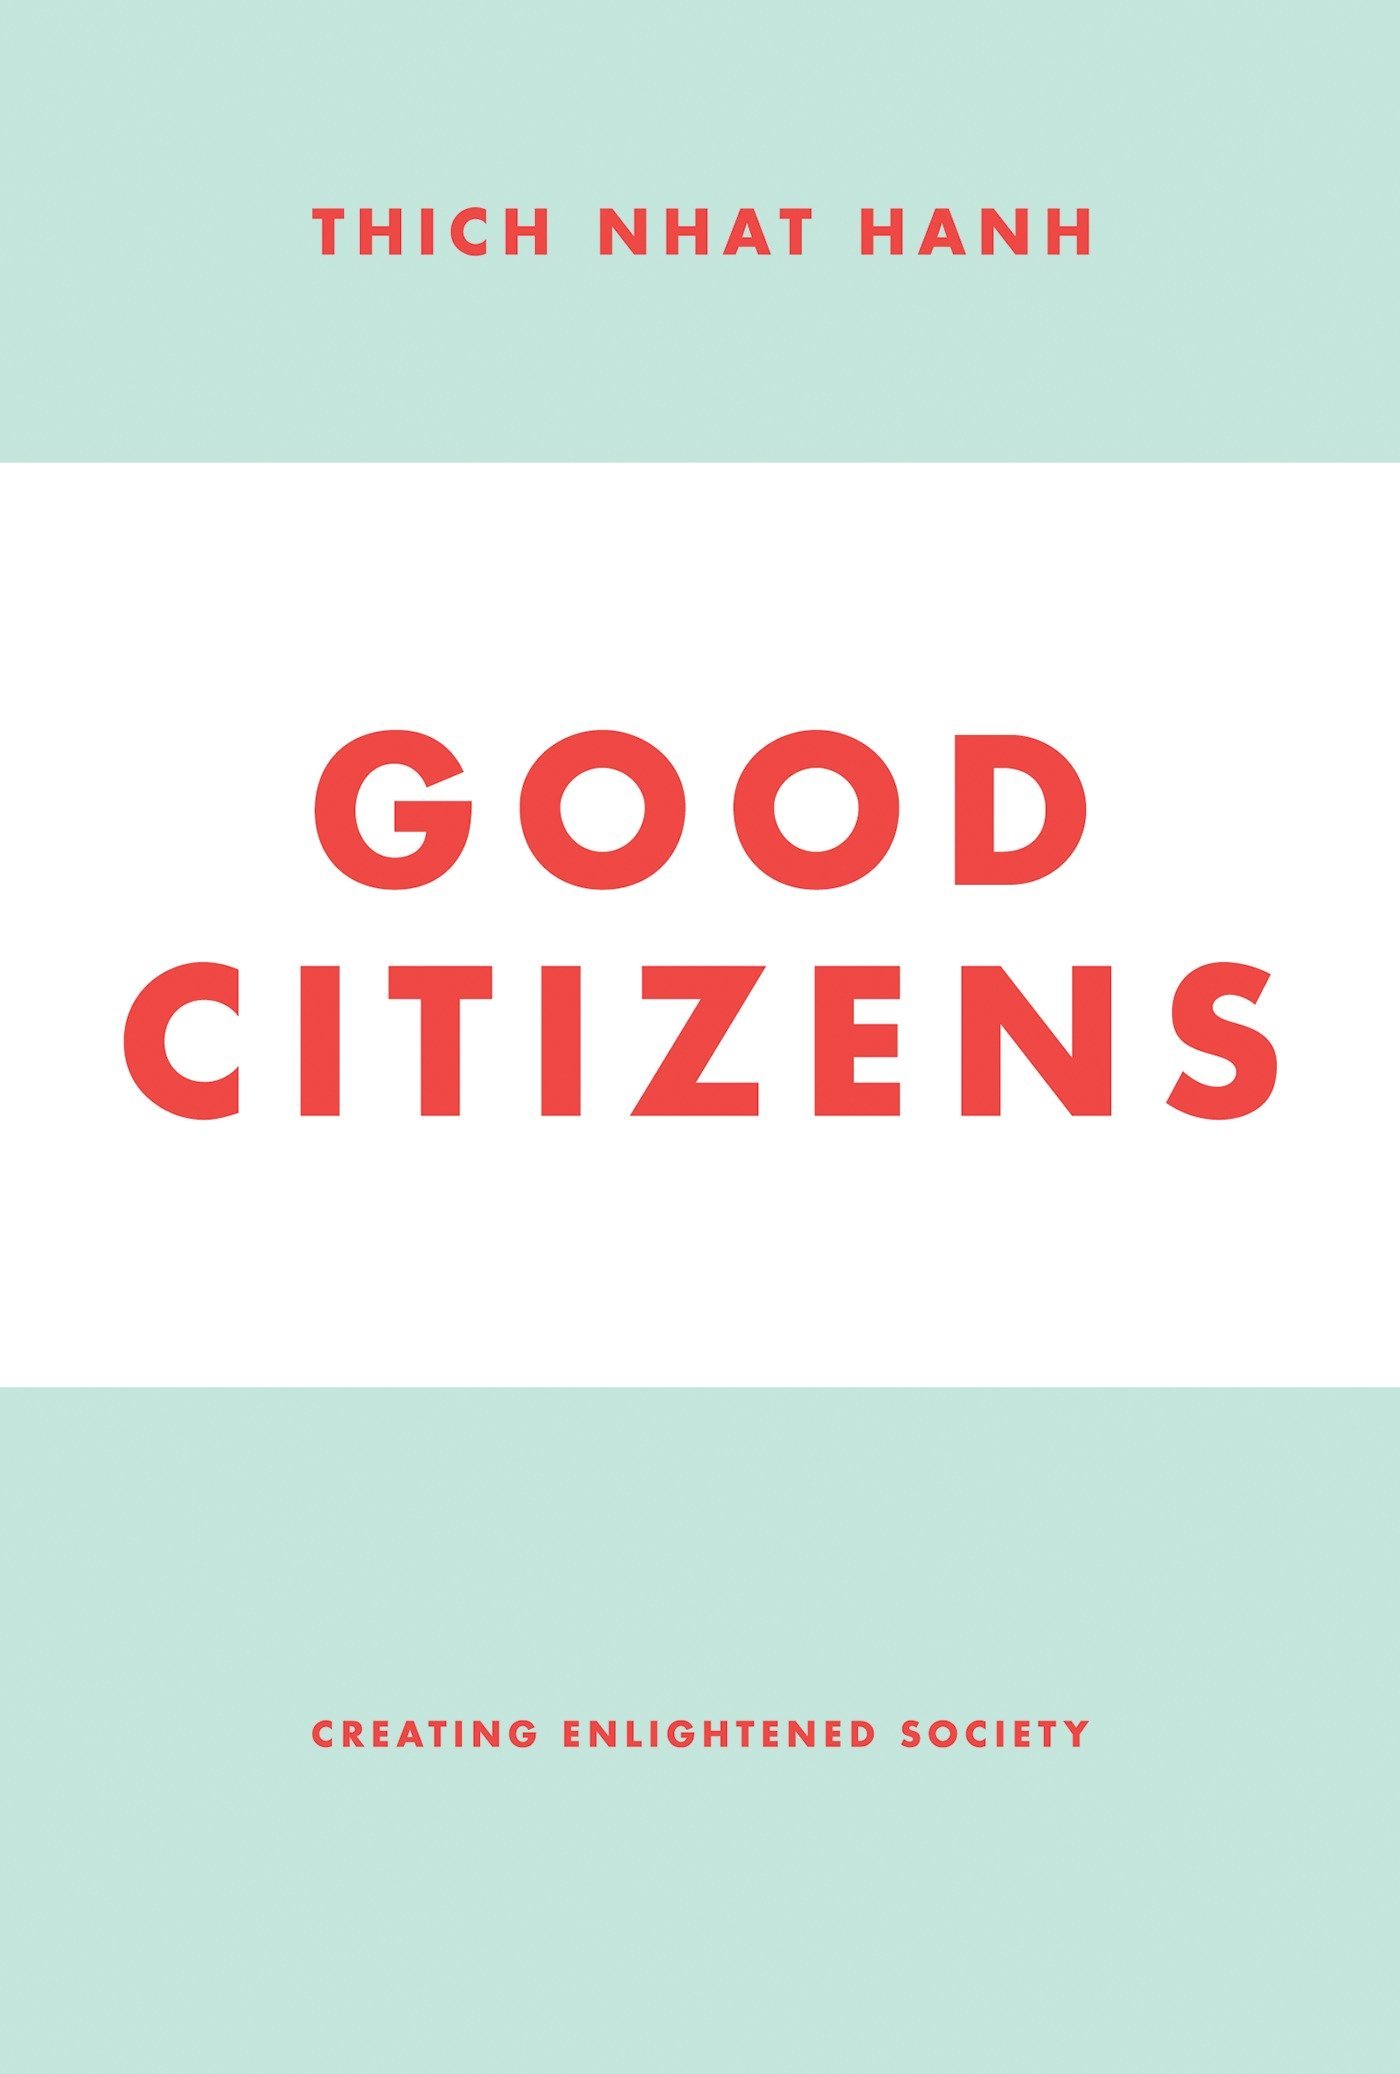 Thích Nhất Hạnh: Good citizens (2012, Parallax Press)